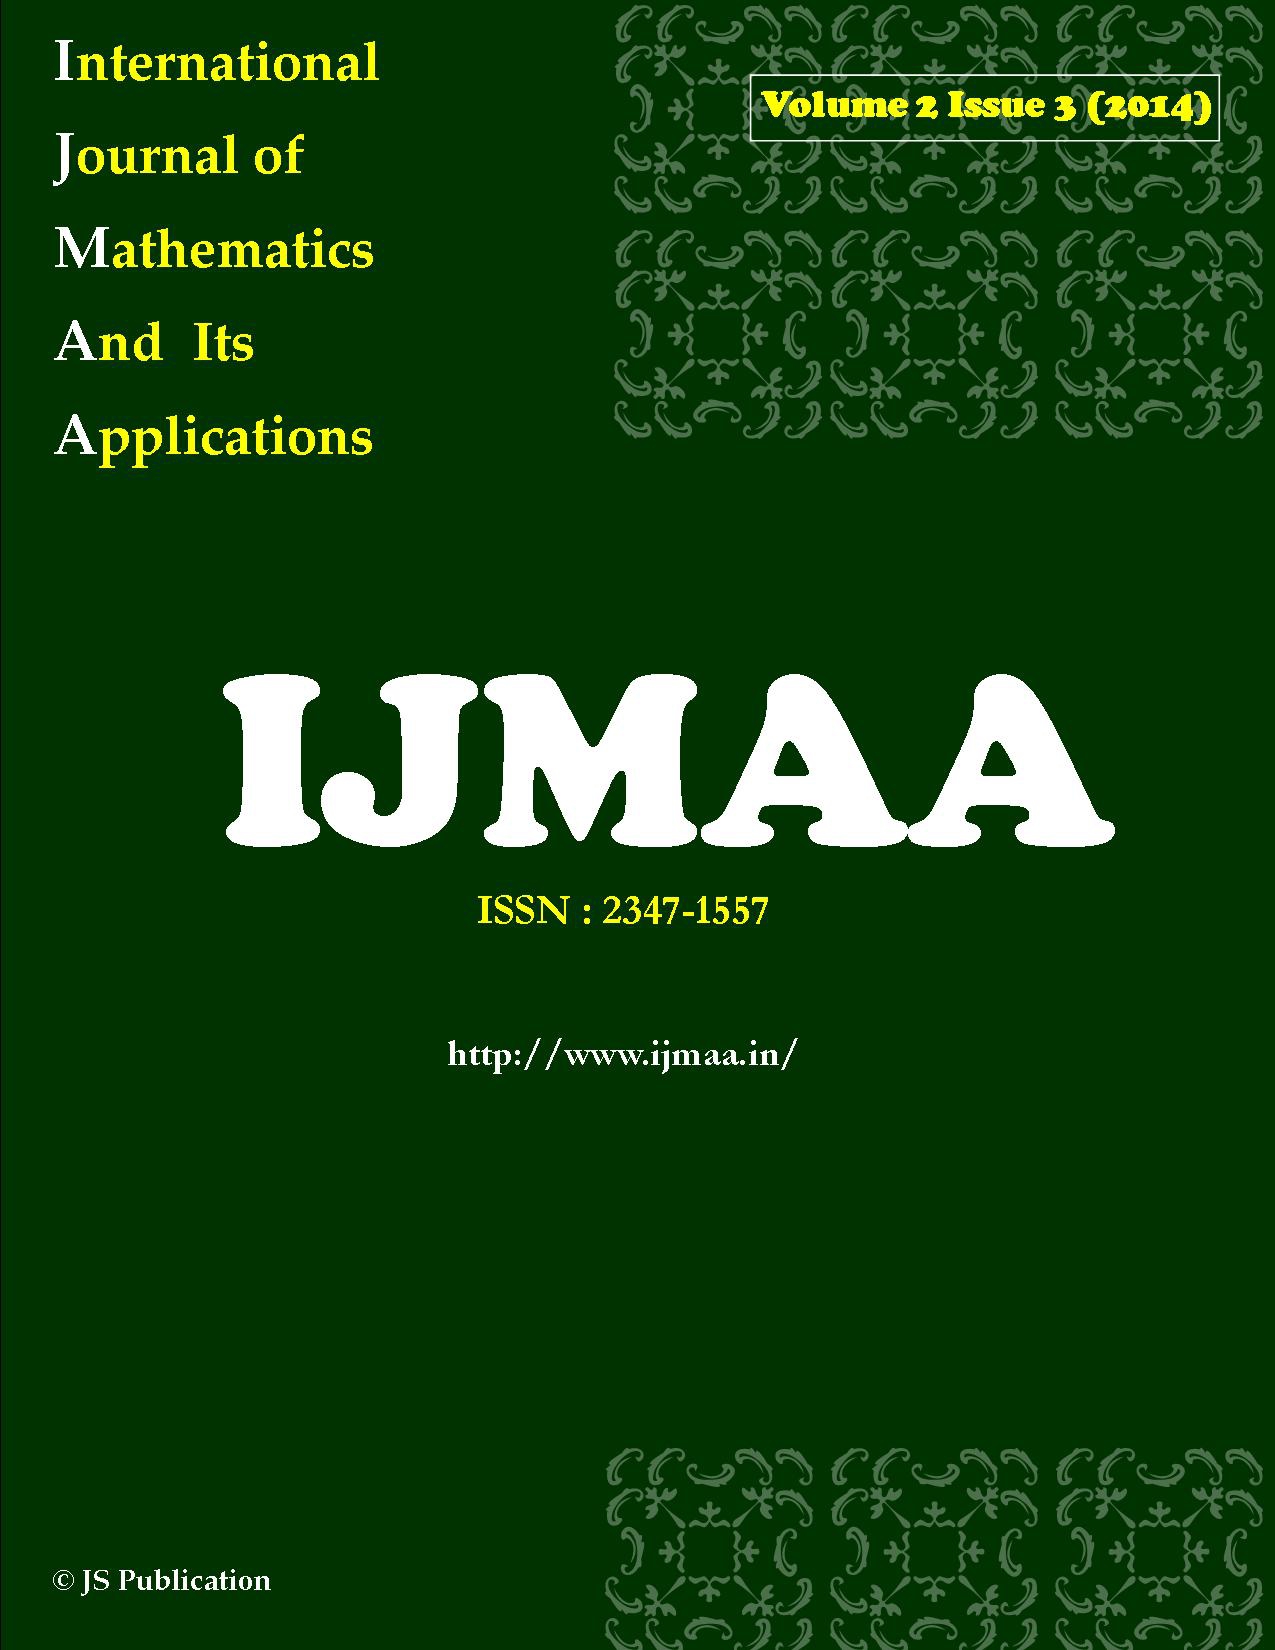 Journal: International Journal of Mathematics And its Applications